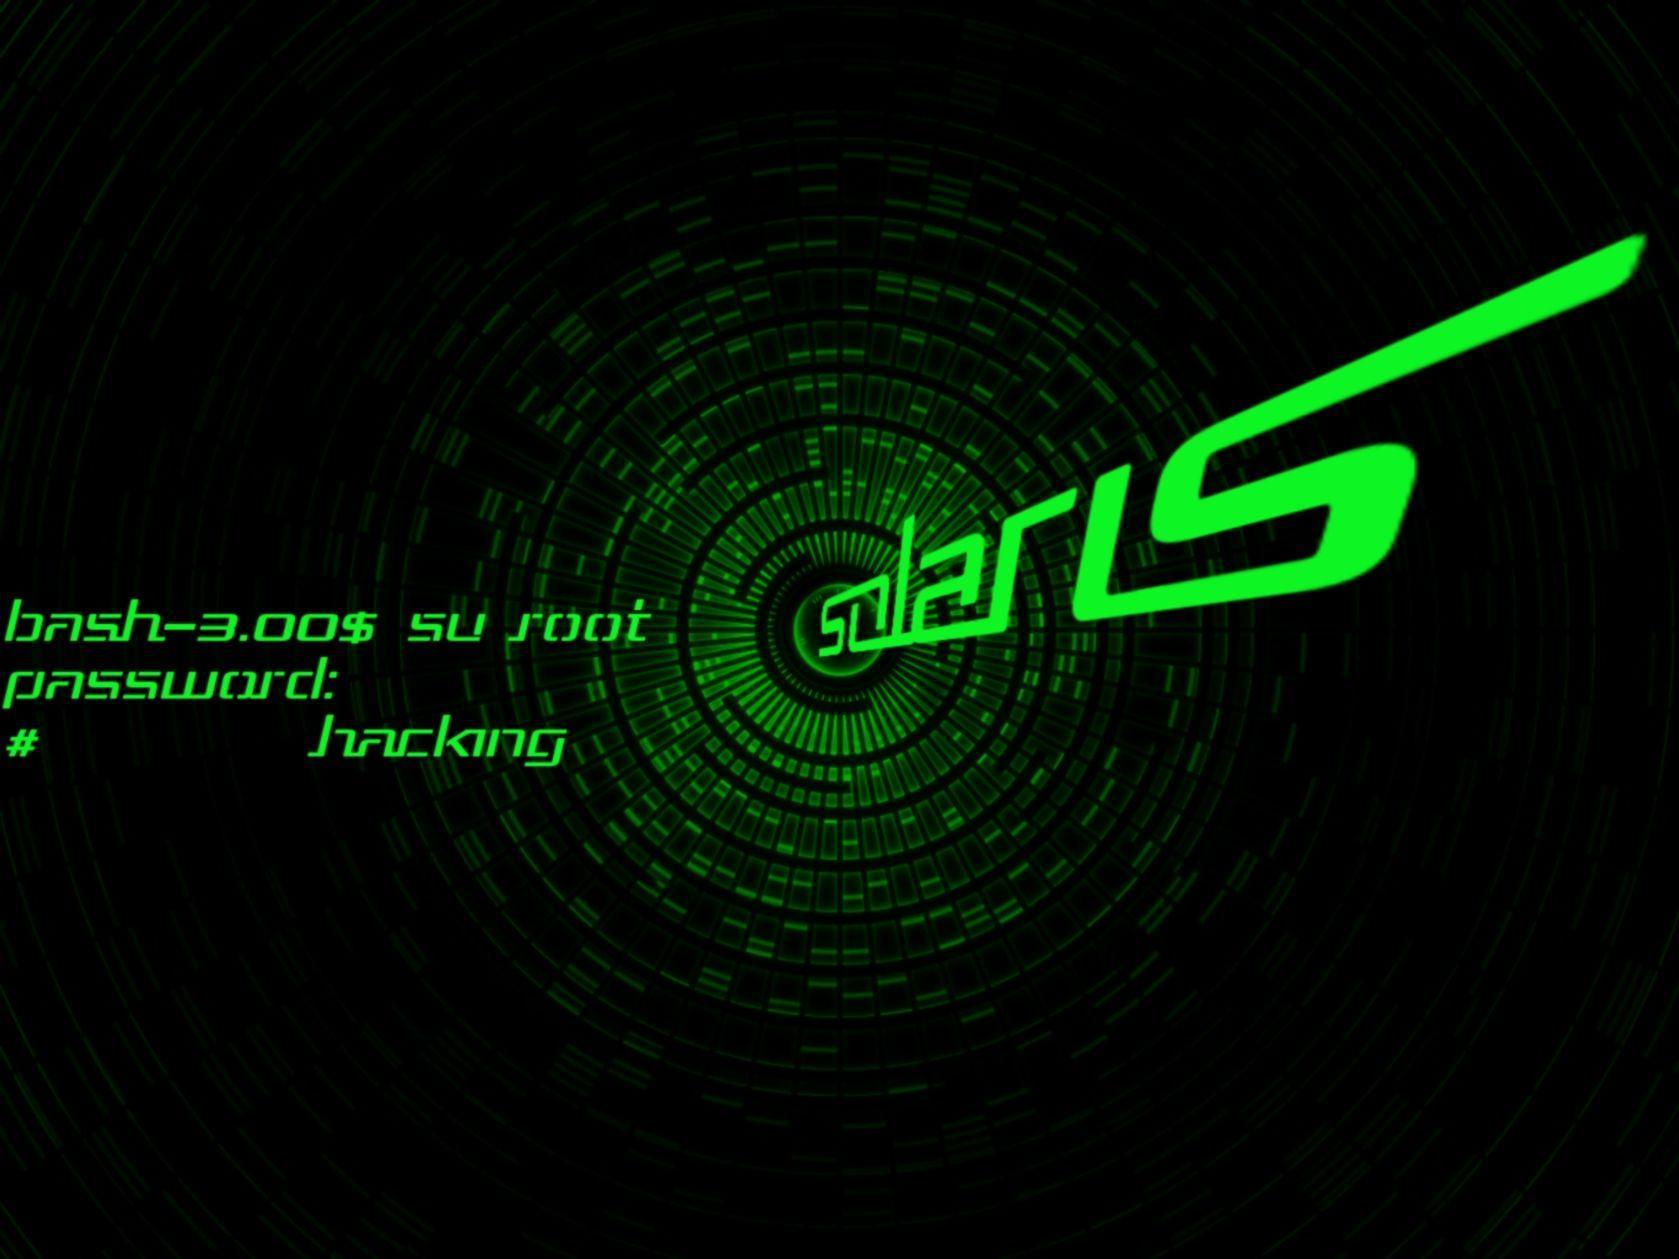 Free desktop wallpaper, Solaris Desktop Hacked